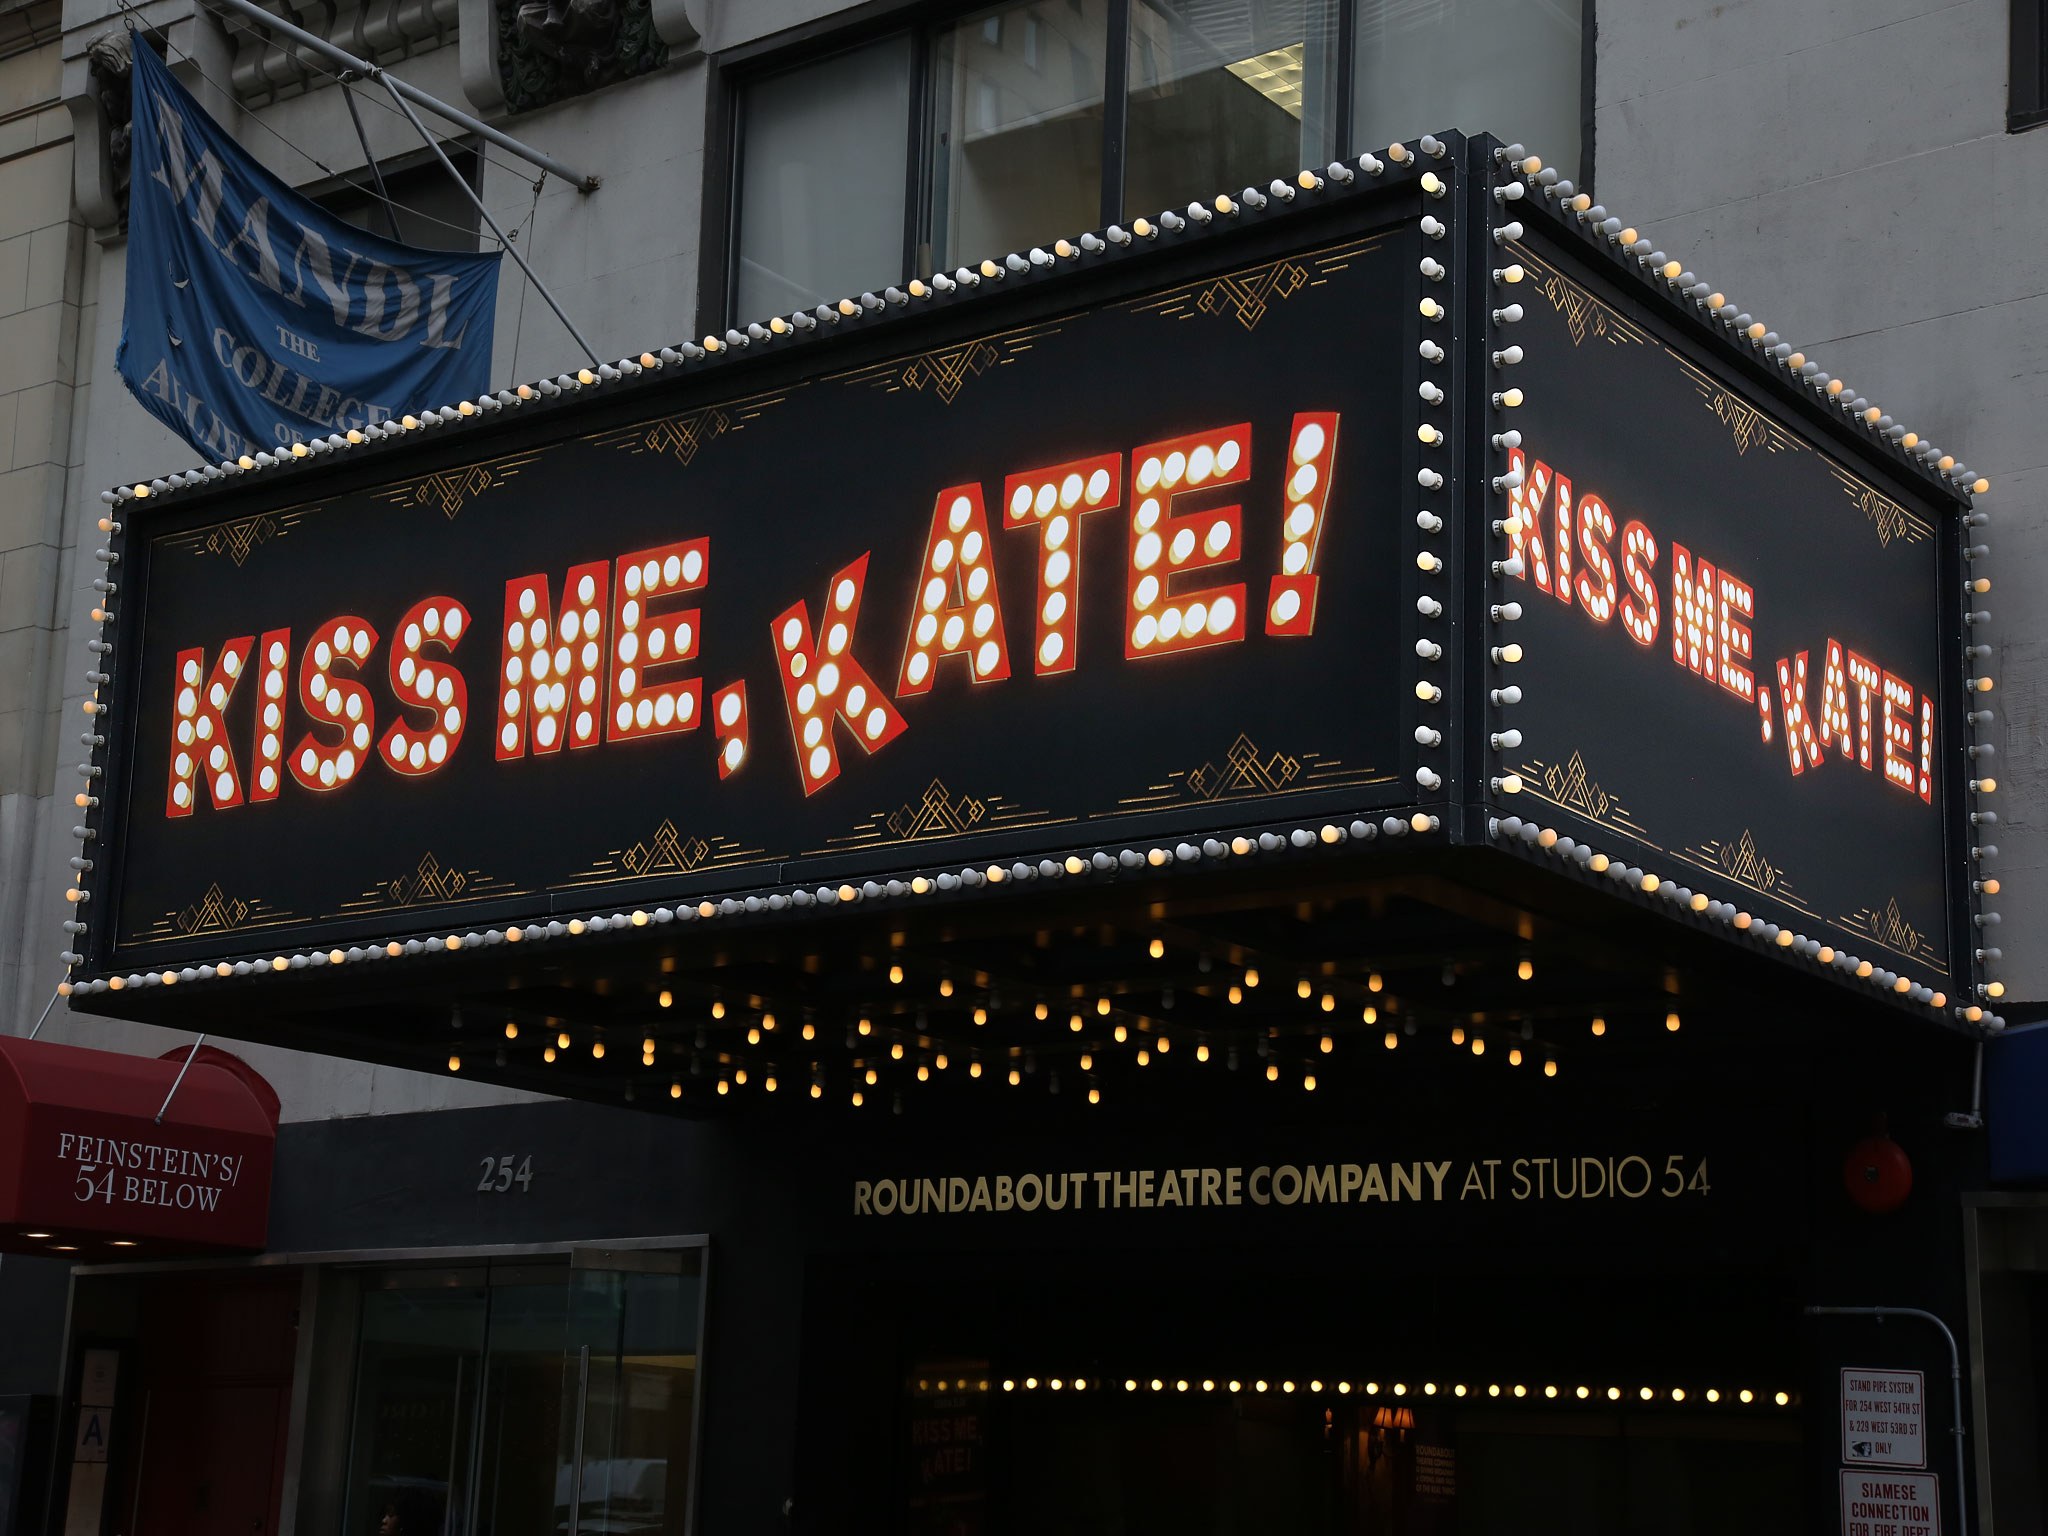 Kiss Me Kate at Studio 54 Theatre